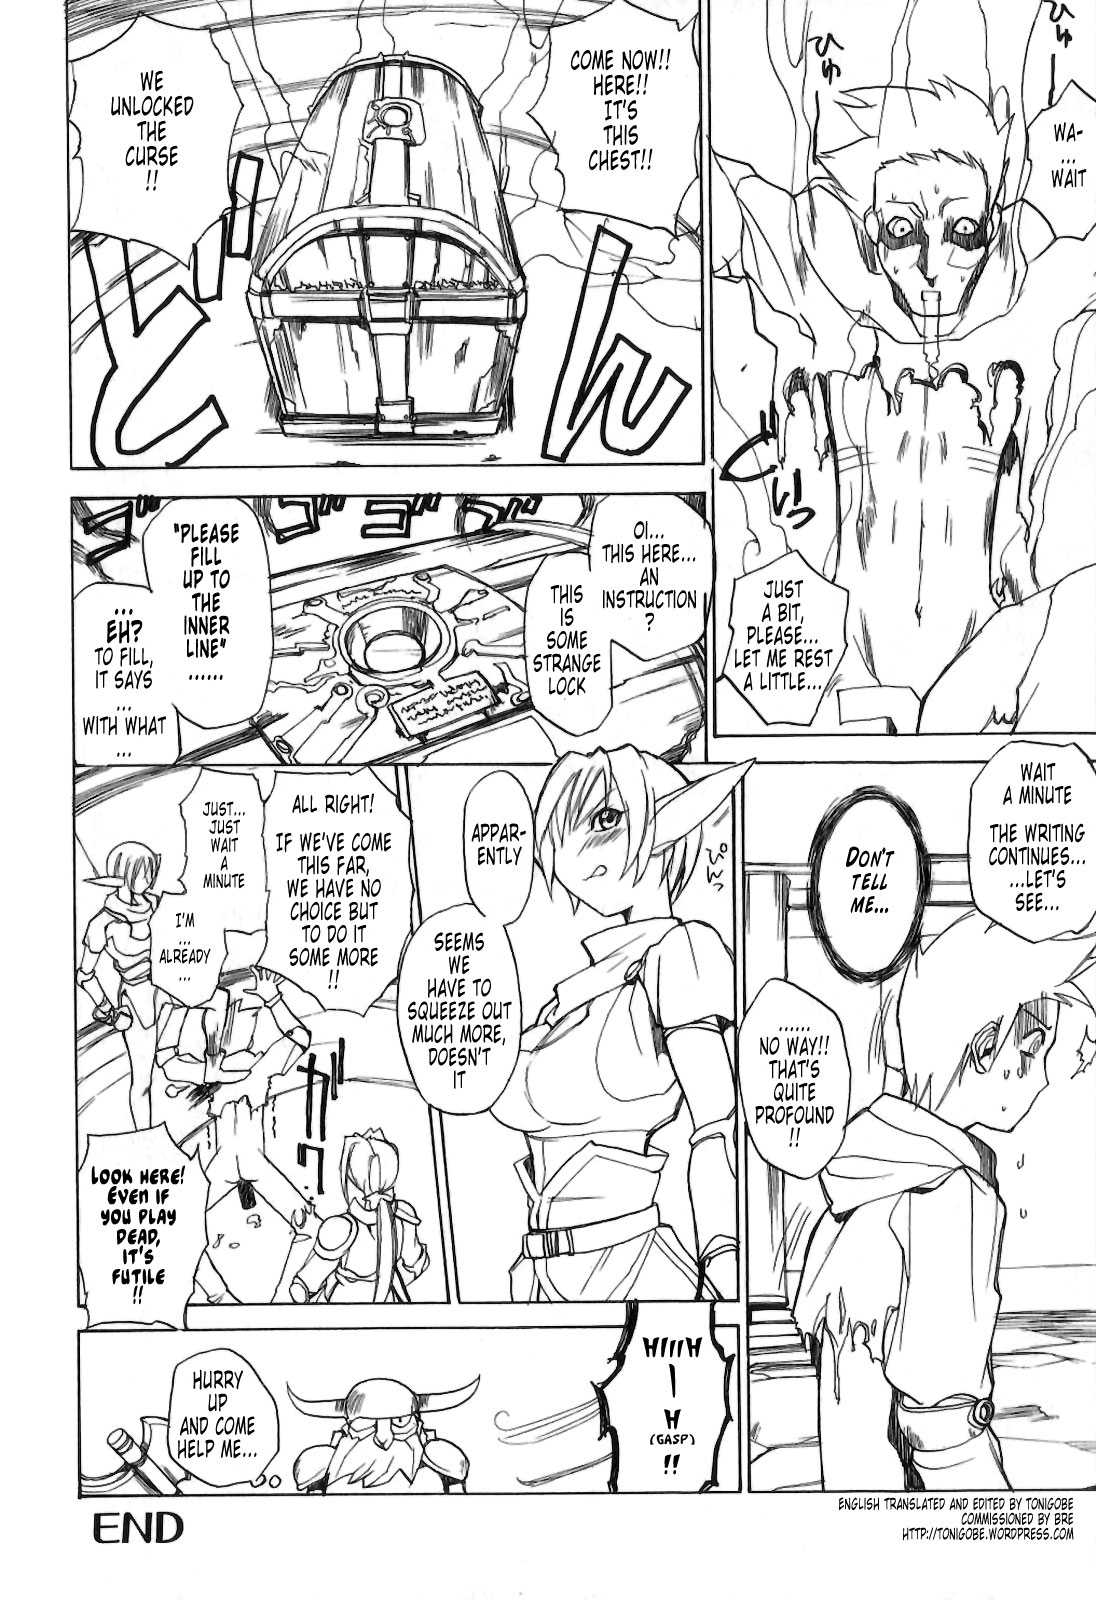 [Tsukasa Midoh] Setsubun Girls - Chapter 9 [English translated by Tonigobe] [御堂つかさ]節分 GIRLS - 第9章 [トニゴビによる英訳]